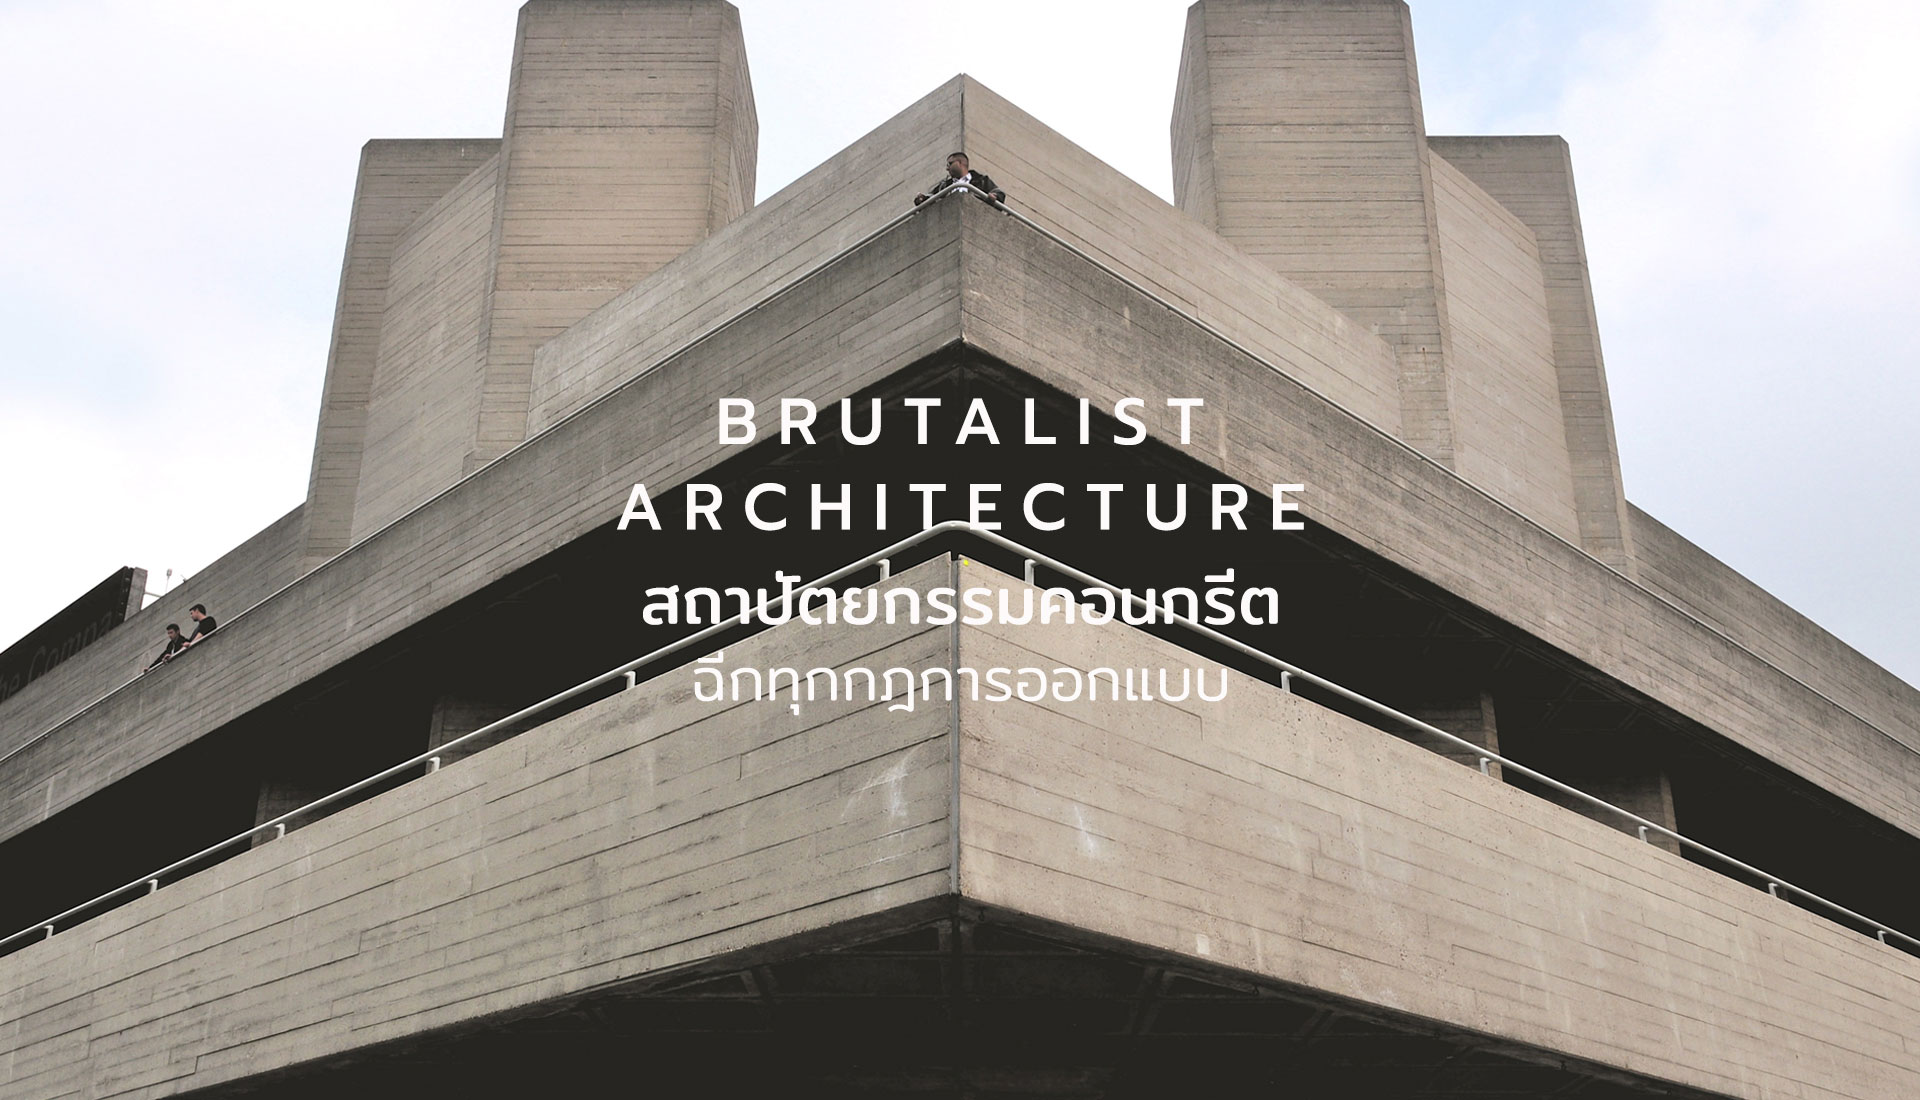 Brutalist Architecture